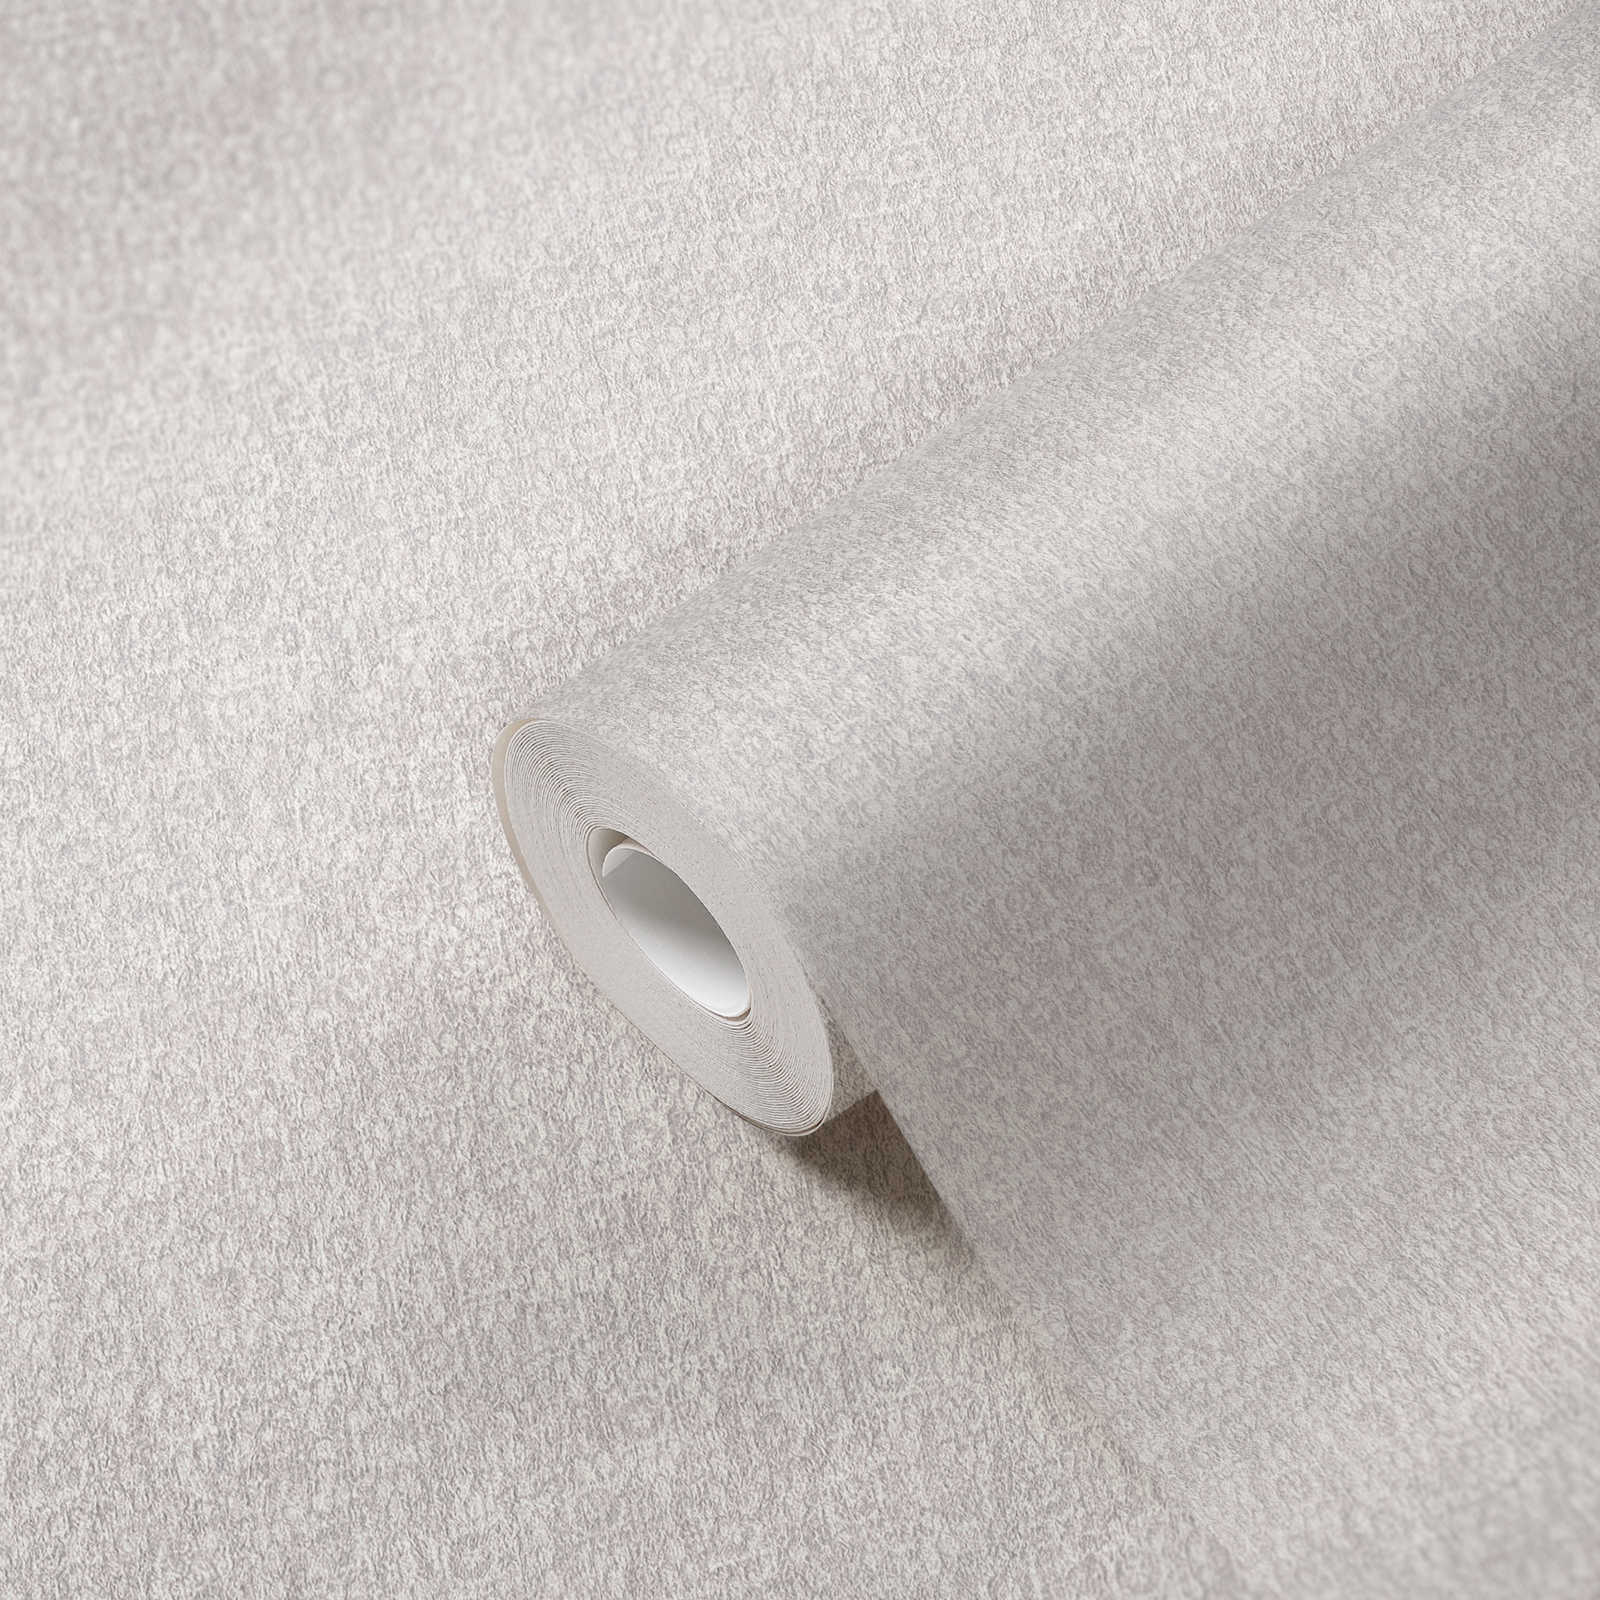             Plain non-woven wallpaper cream with textile texture effect
        